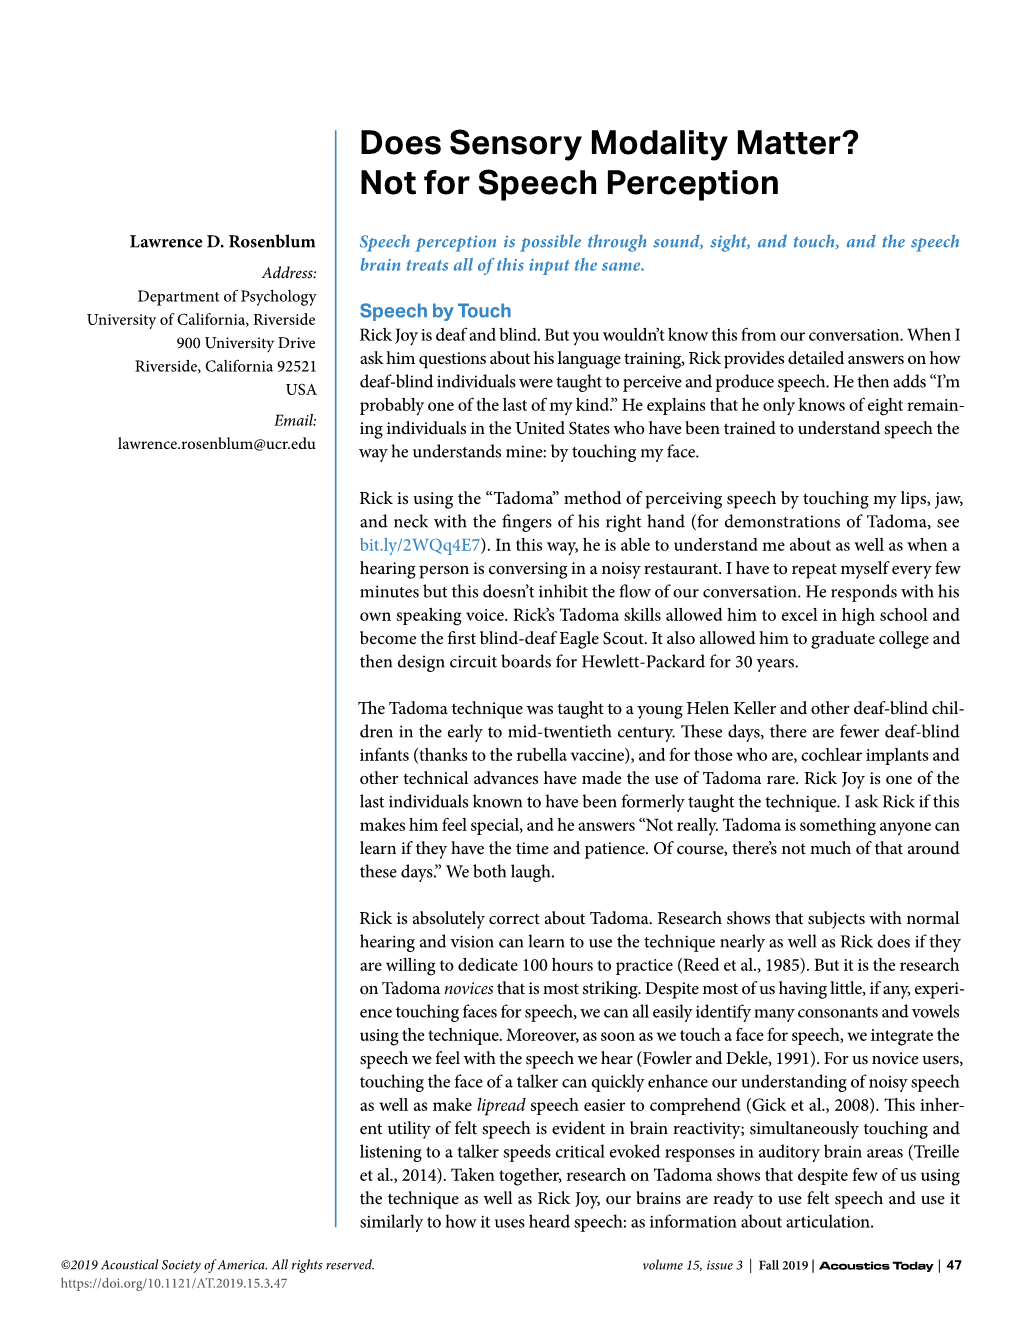 Does Sensory Modality Matter? Not for Speech Perception